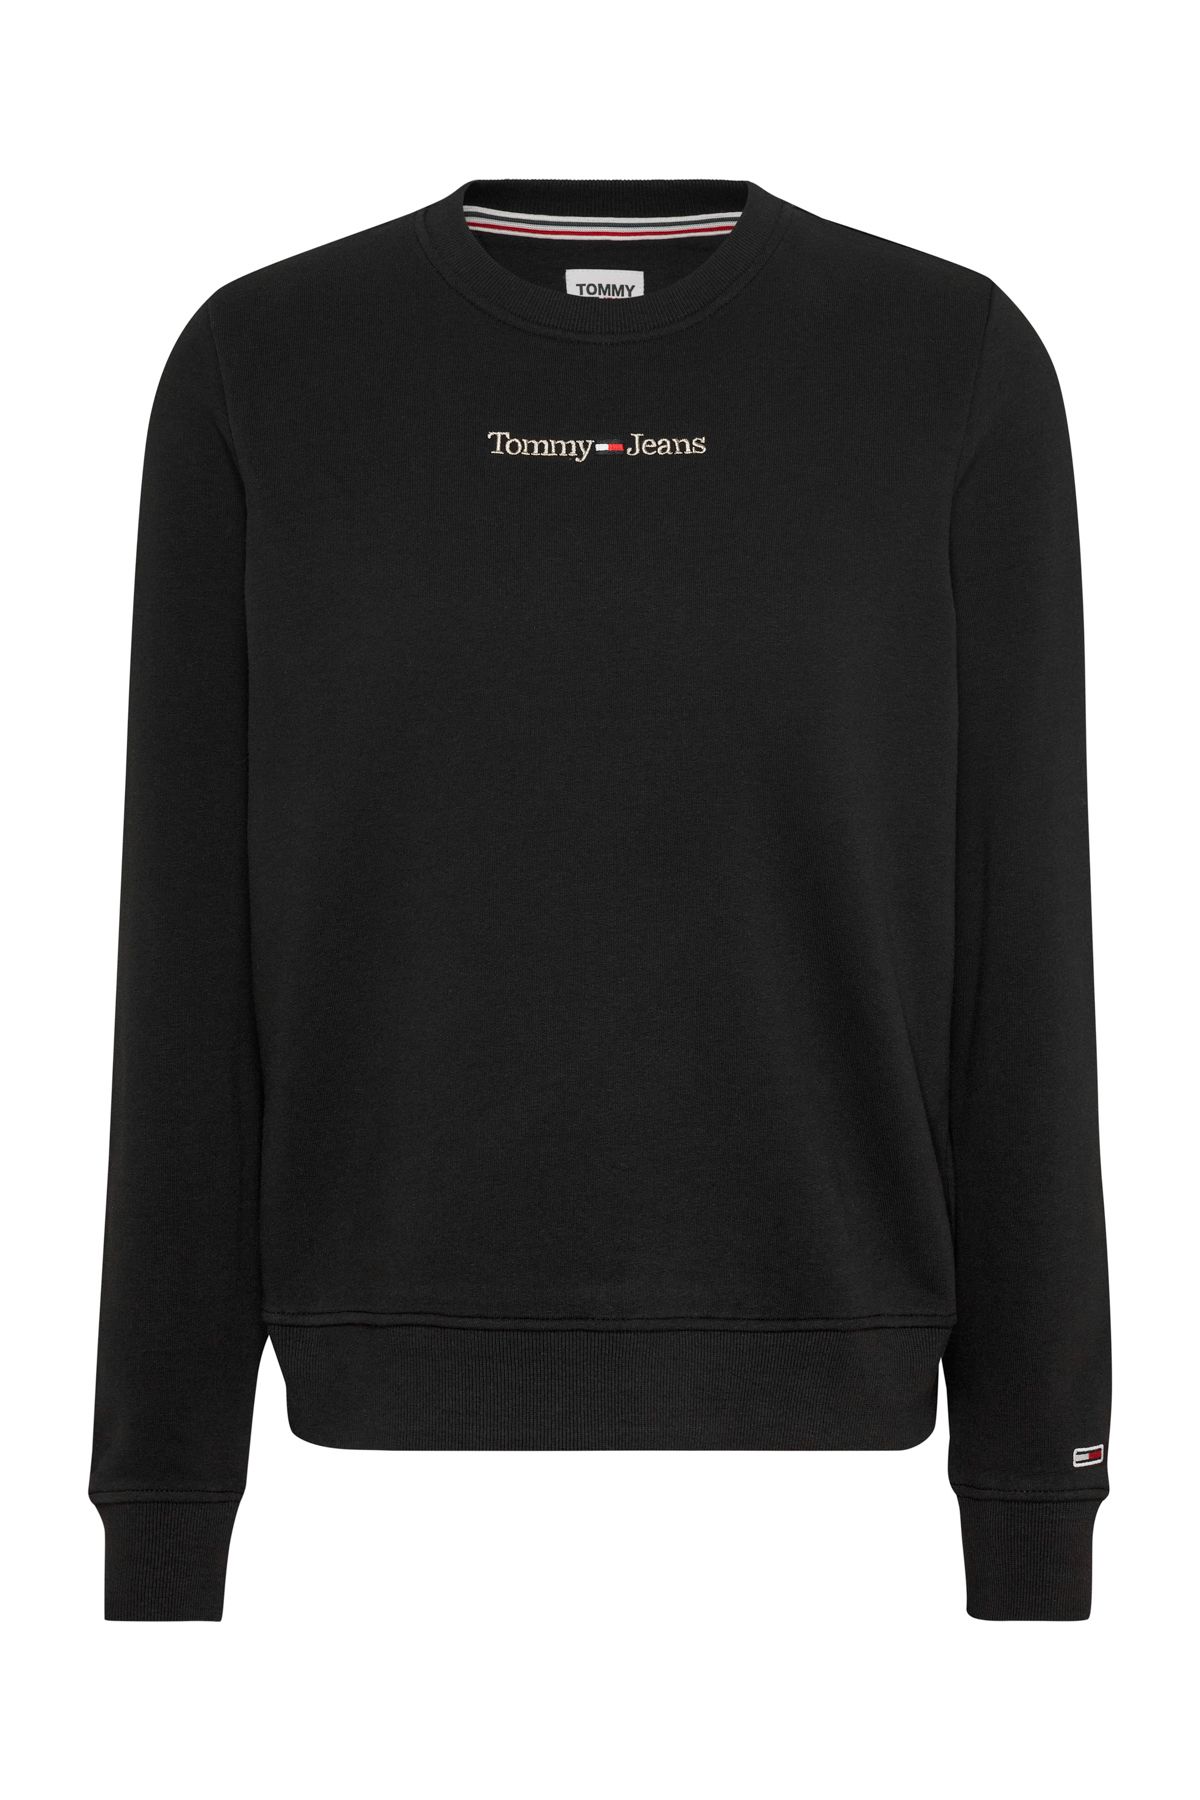 Hilfiger - - Black fit Regular Tommy - Sweatshirt Trendyol